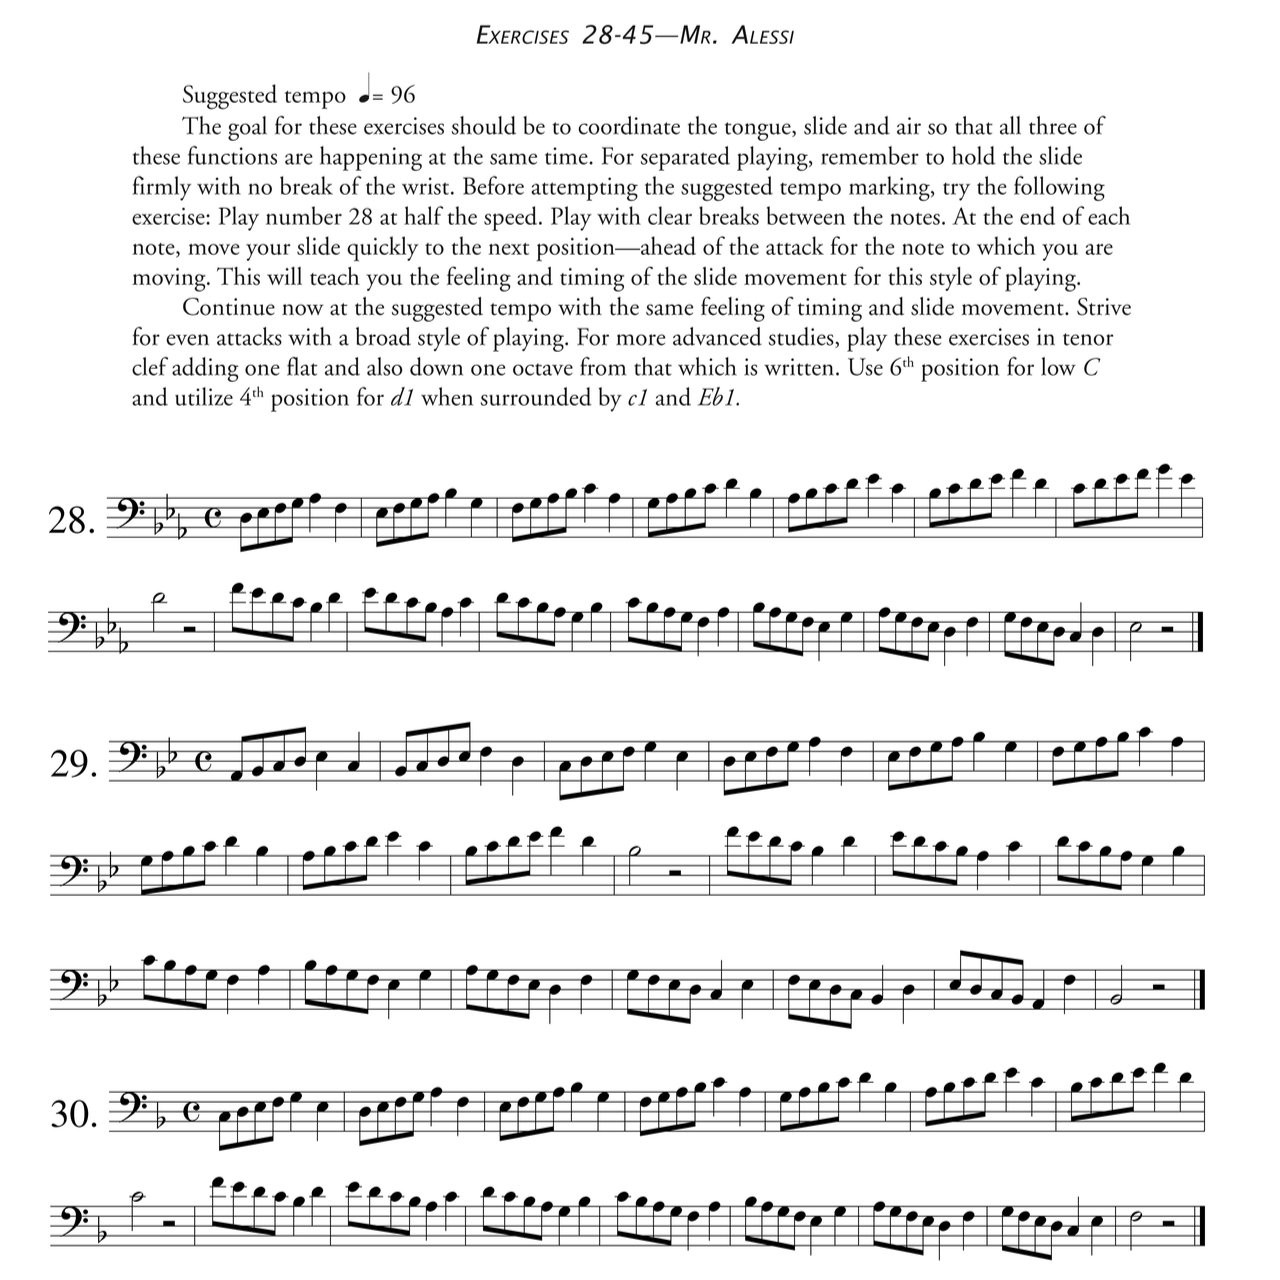 arban para trombone pdf